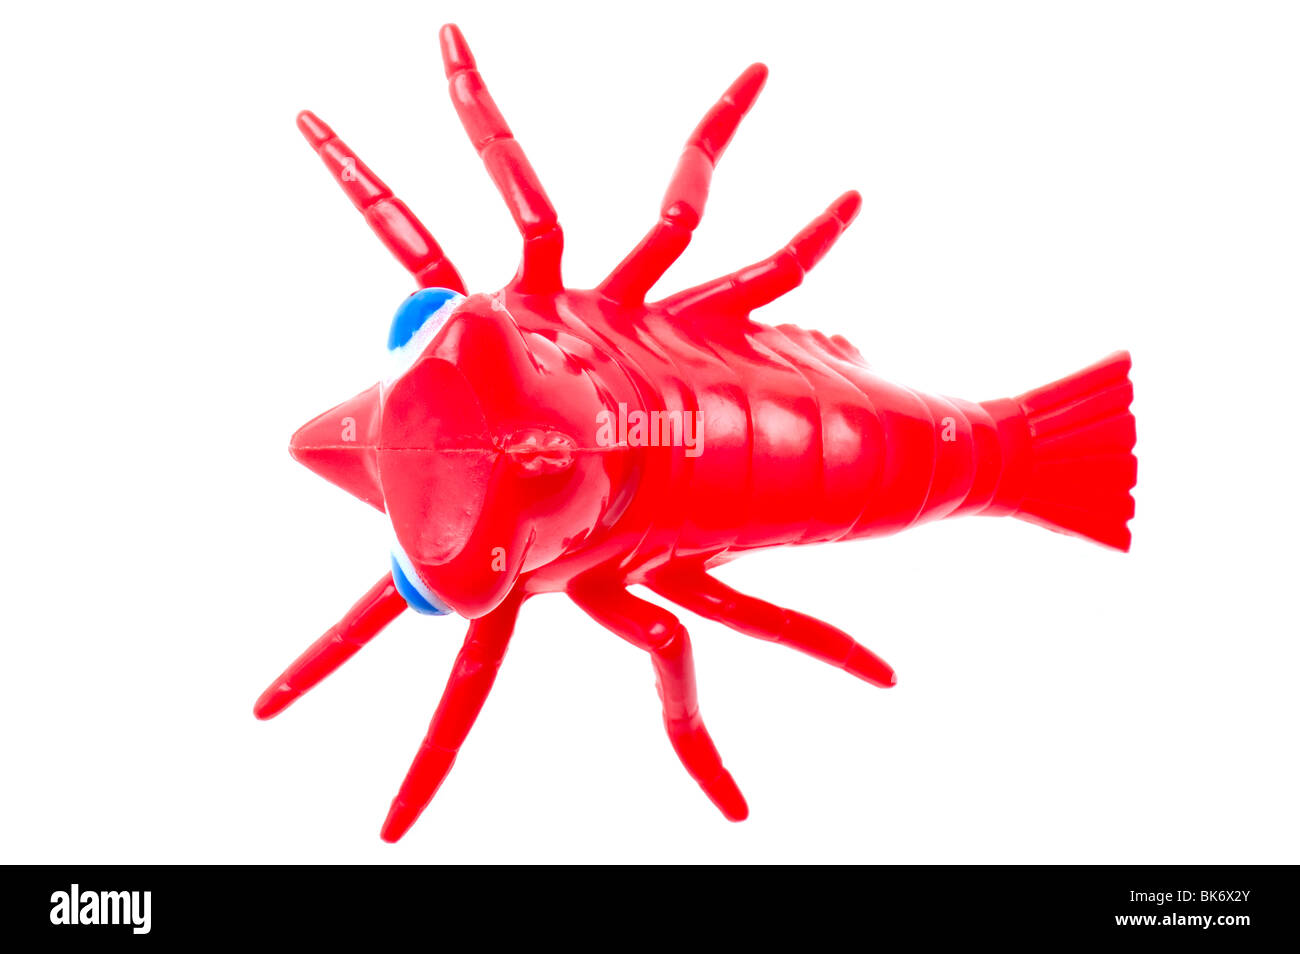 https://c8.alamy.com/comp/BK6X2Y/object-on-white-toy-shrimp-close-up-BK6X2Y.jpg